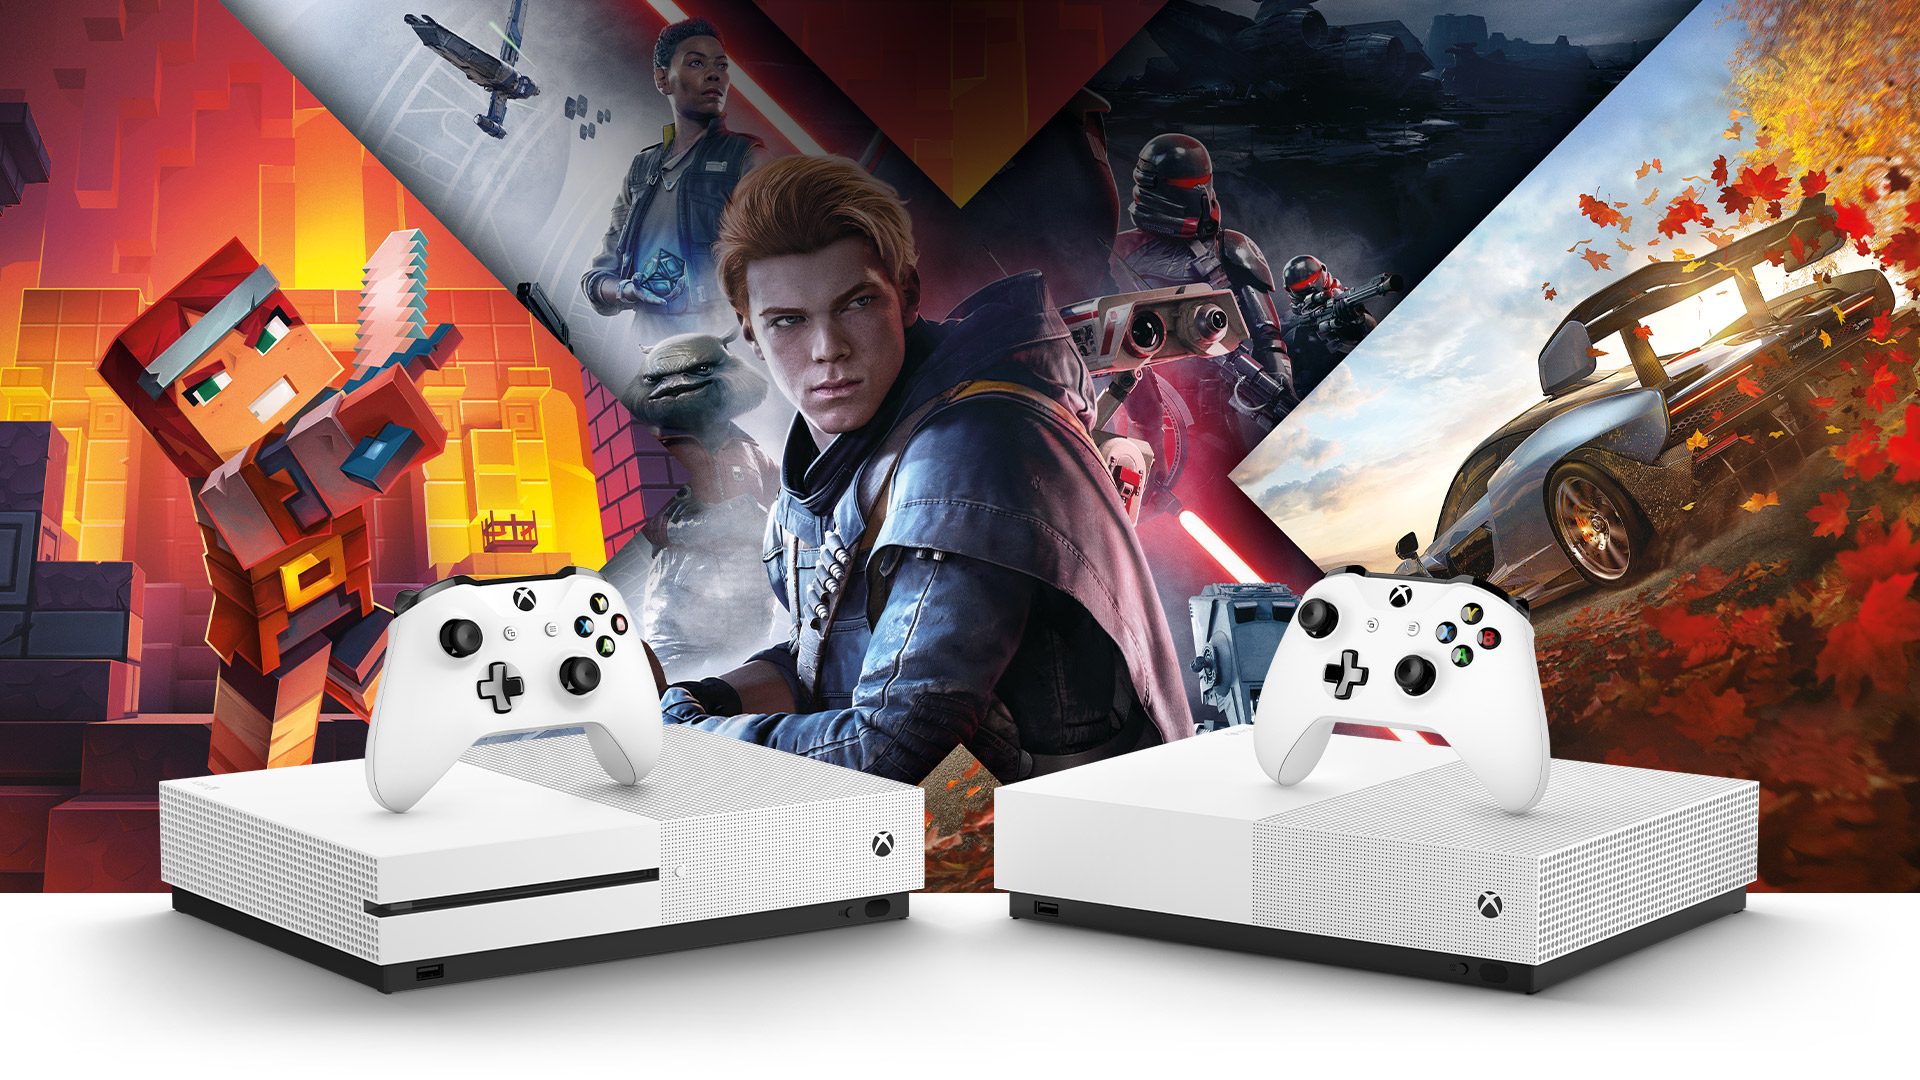 Вид спереди на Xbox One S и Xbox One S All Digital Edition в окружении иллюстраций к играм Minecraft, Forza Horizon 4, Star Wars Jedi Fallen Order